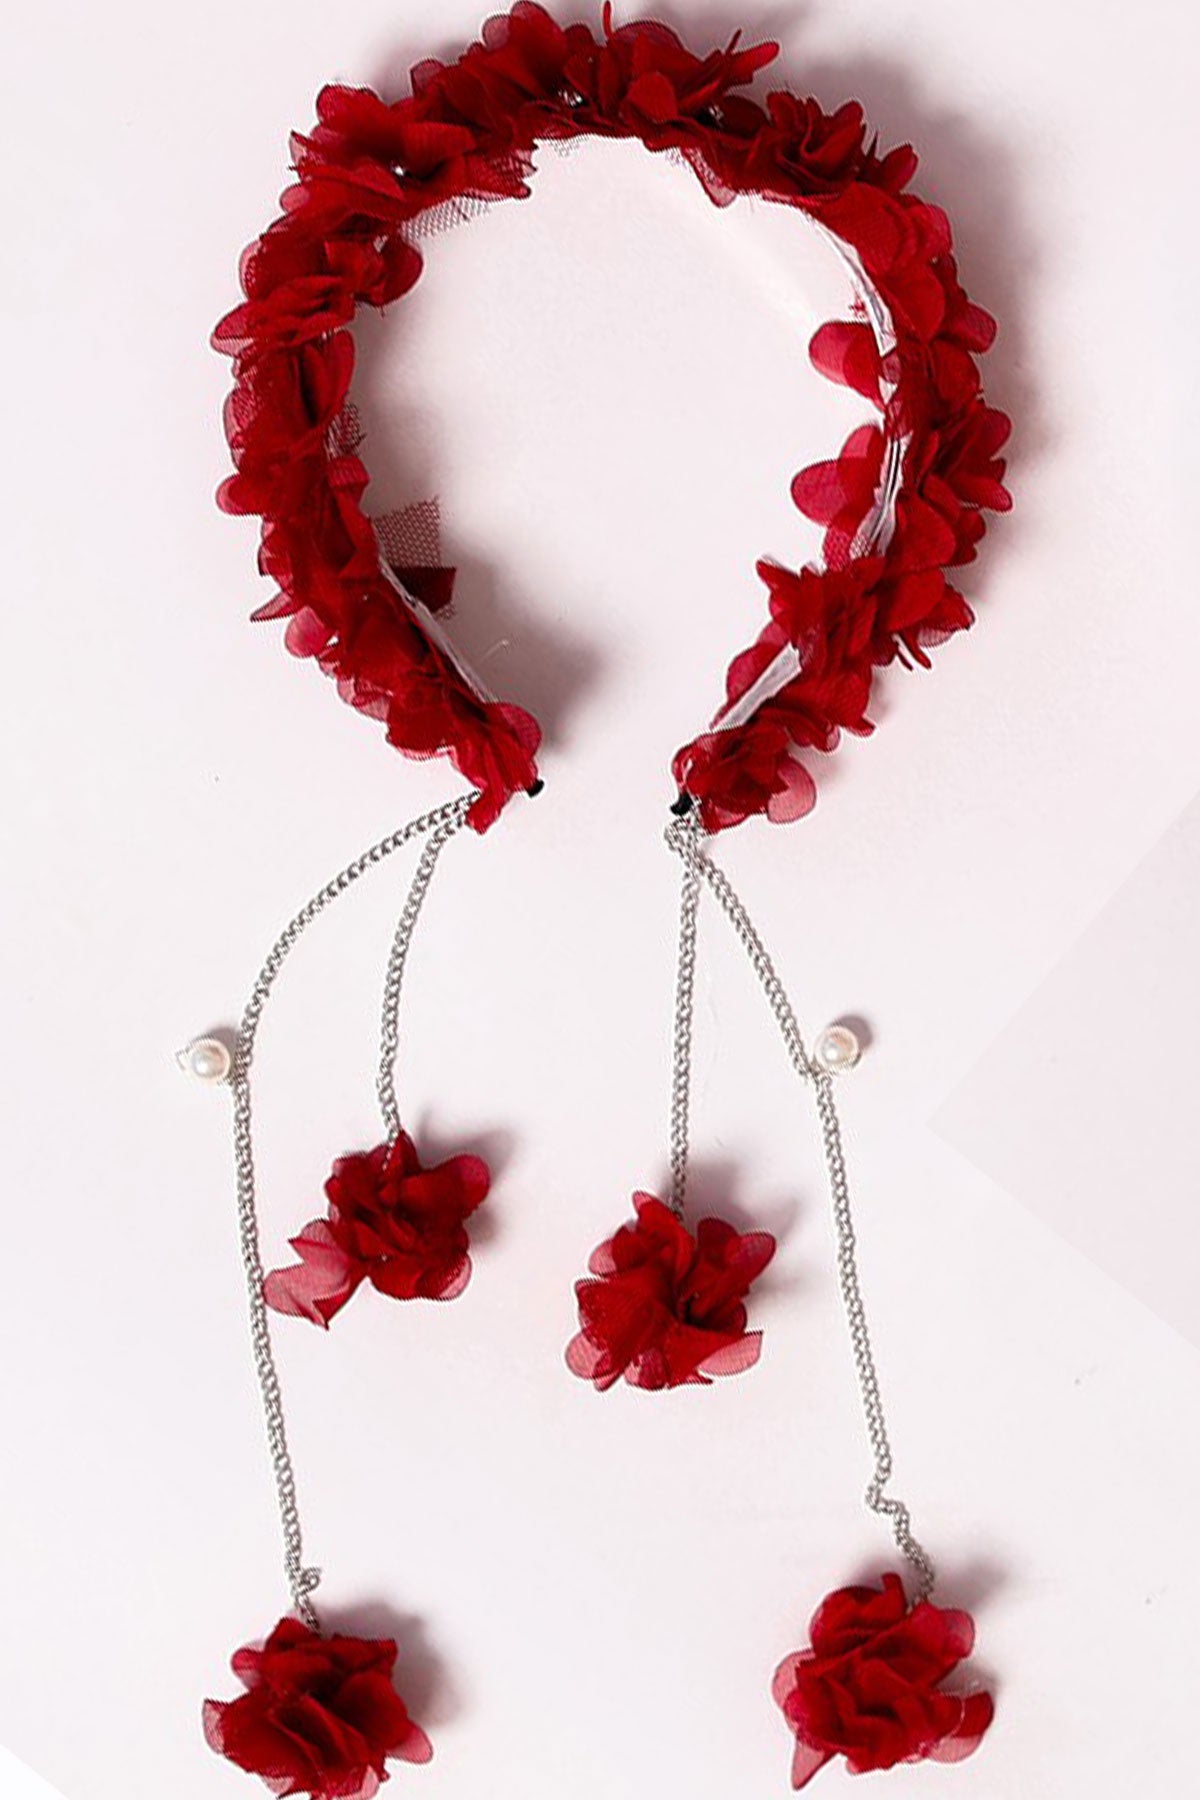 Shopymommy 757101 Azalea Flowered Maternity Crown & Maternity Slippers Set Claret Red